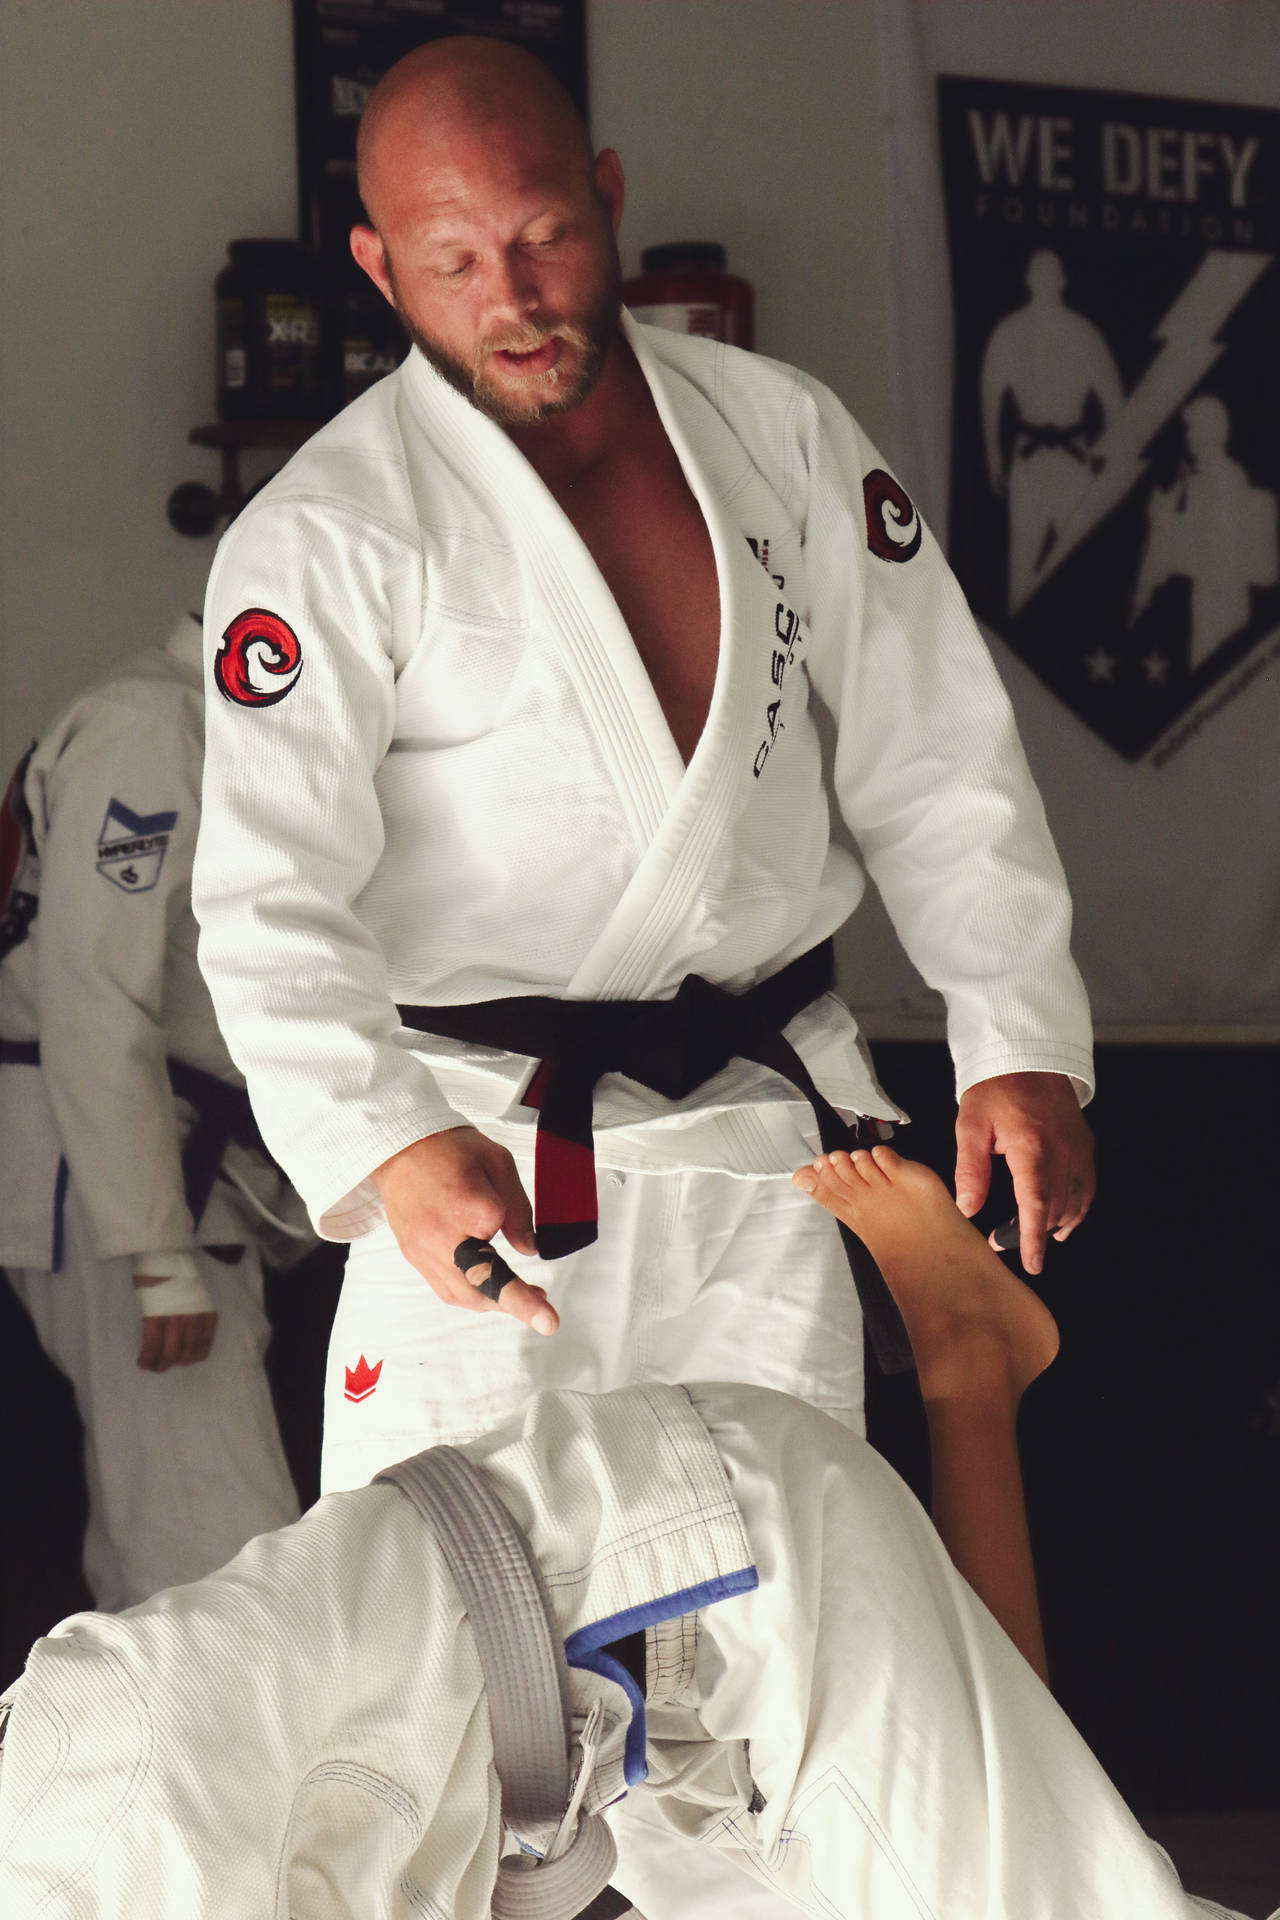 Judo Coach